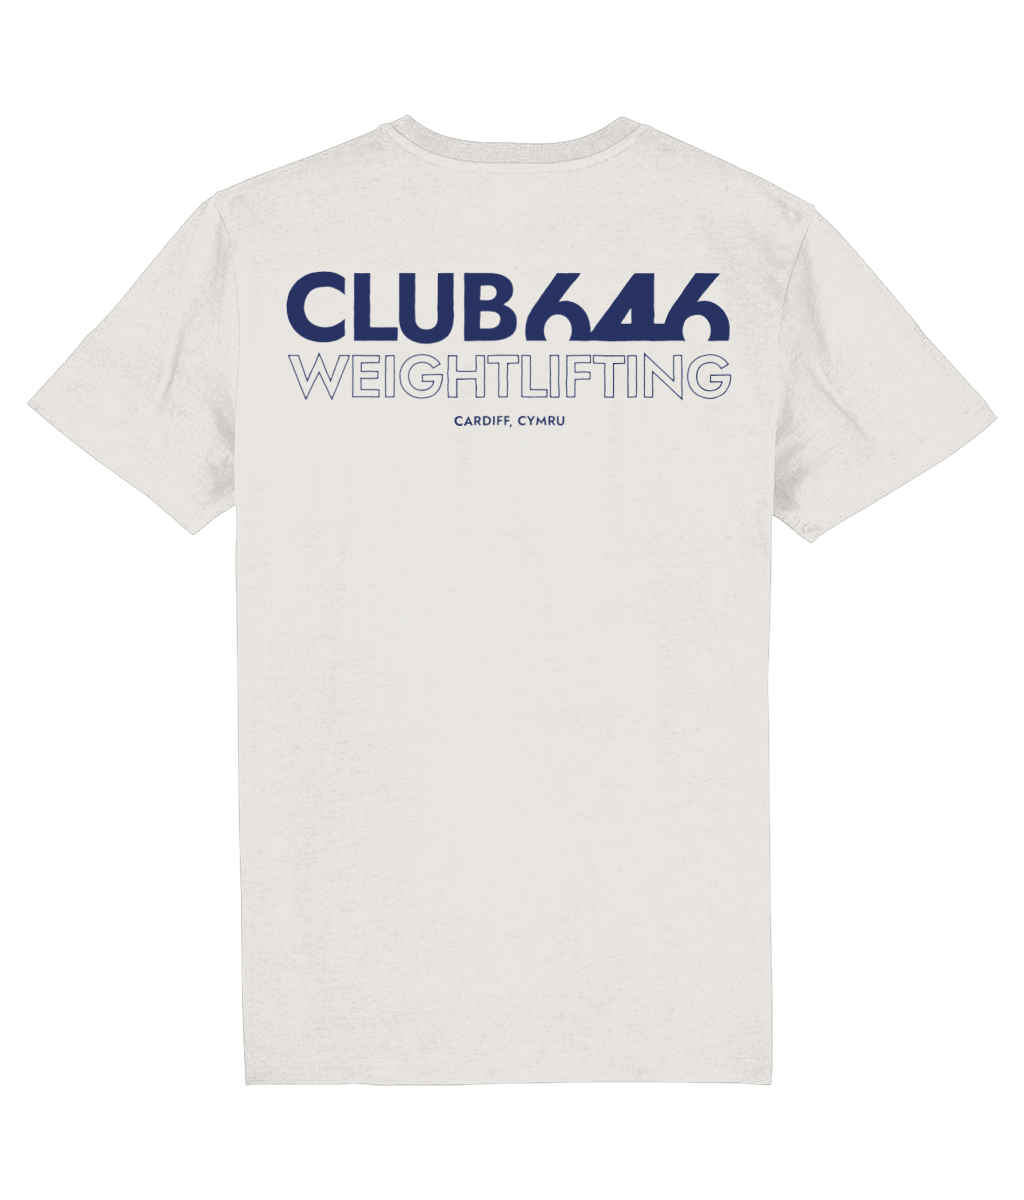 Club 646 (blue) t-shirt